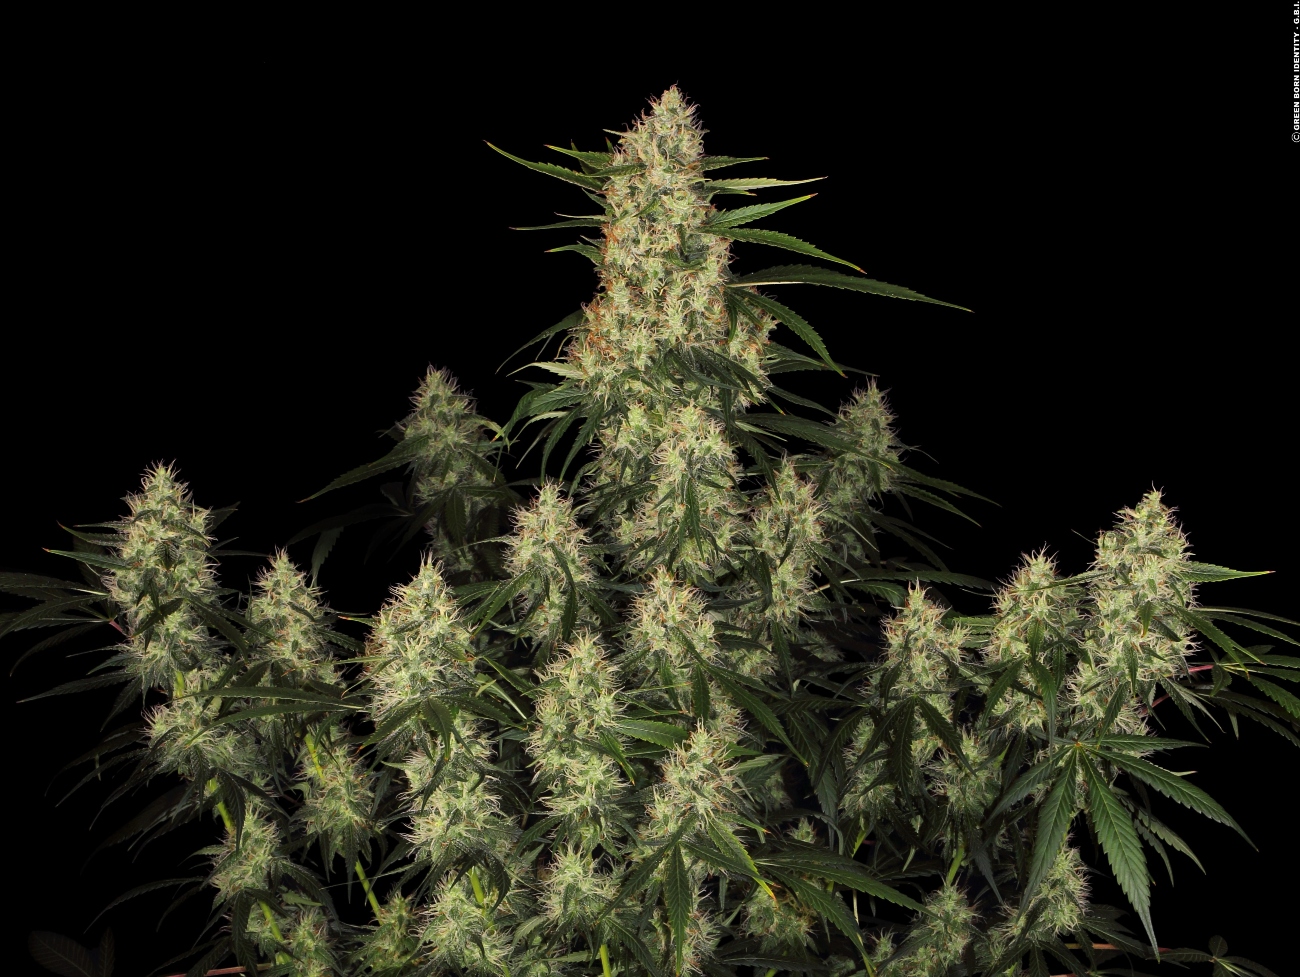 The Amnesia marijuana strain is a relatively high-THC/CBD ratio. 